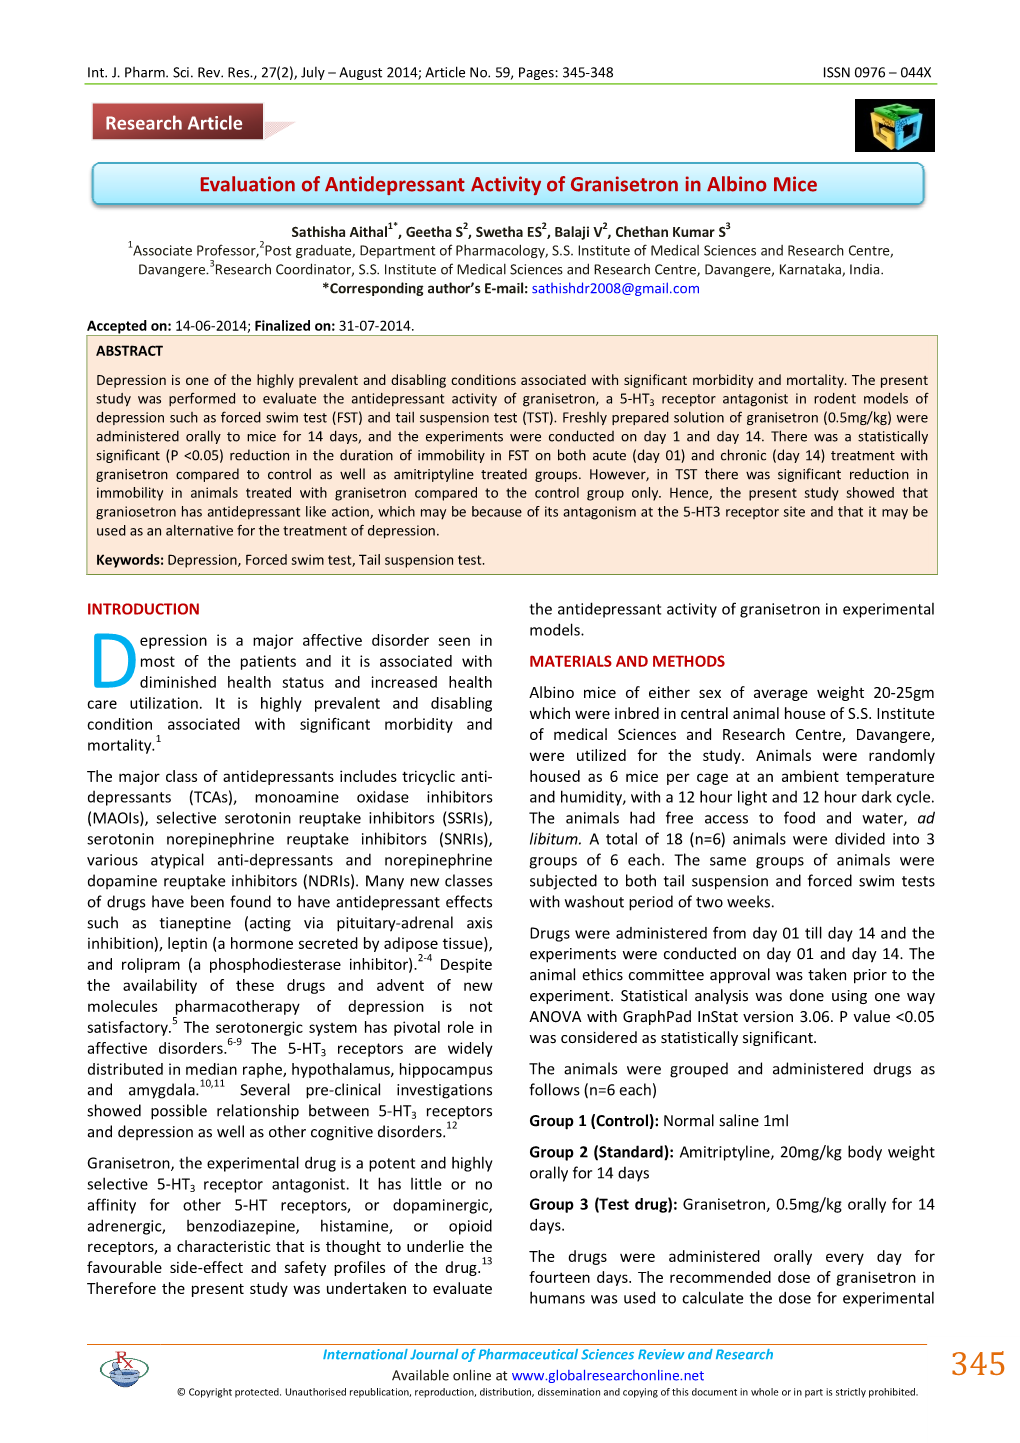 Evaluation of Antidepressant Activity of Granisetron in Albino Mice